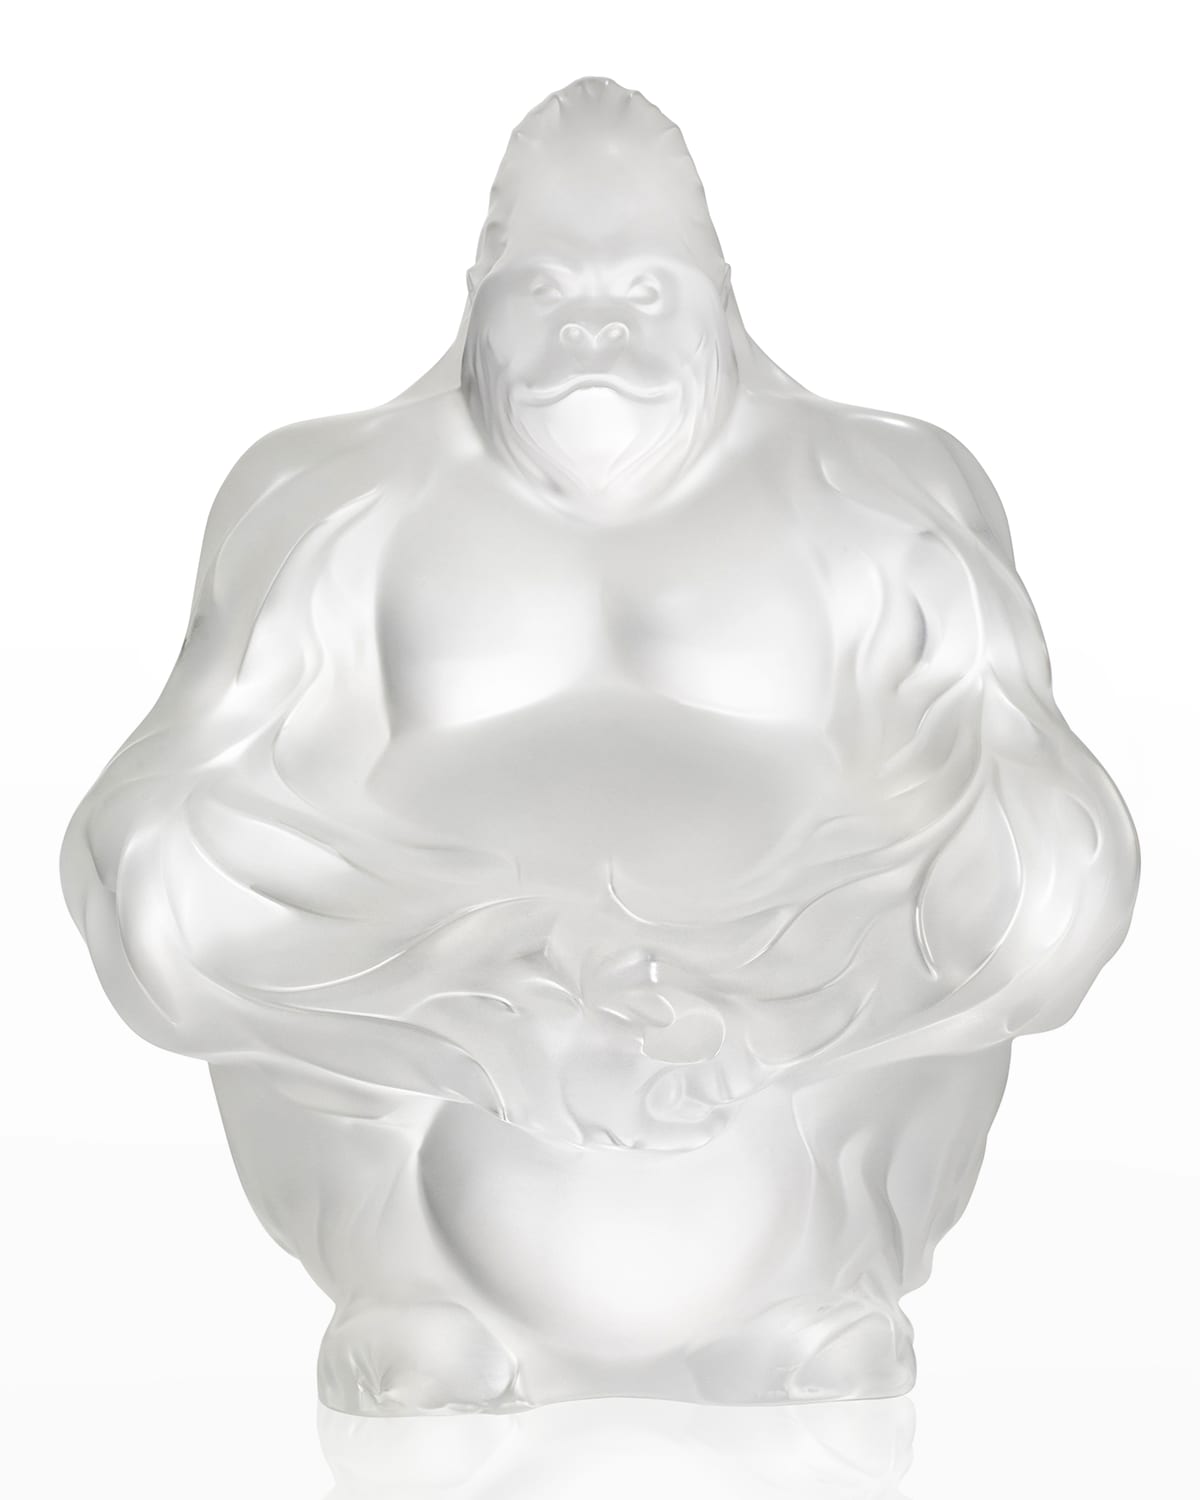 Crystal Gorilla Sculpture/Figurine, Clear